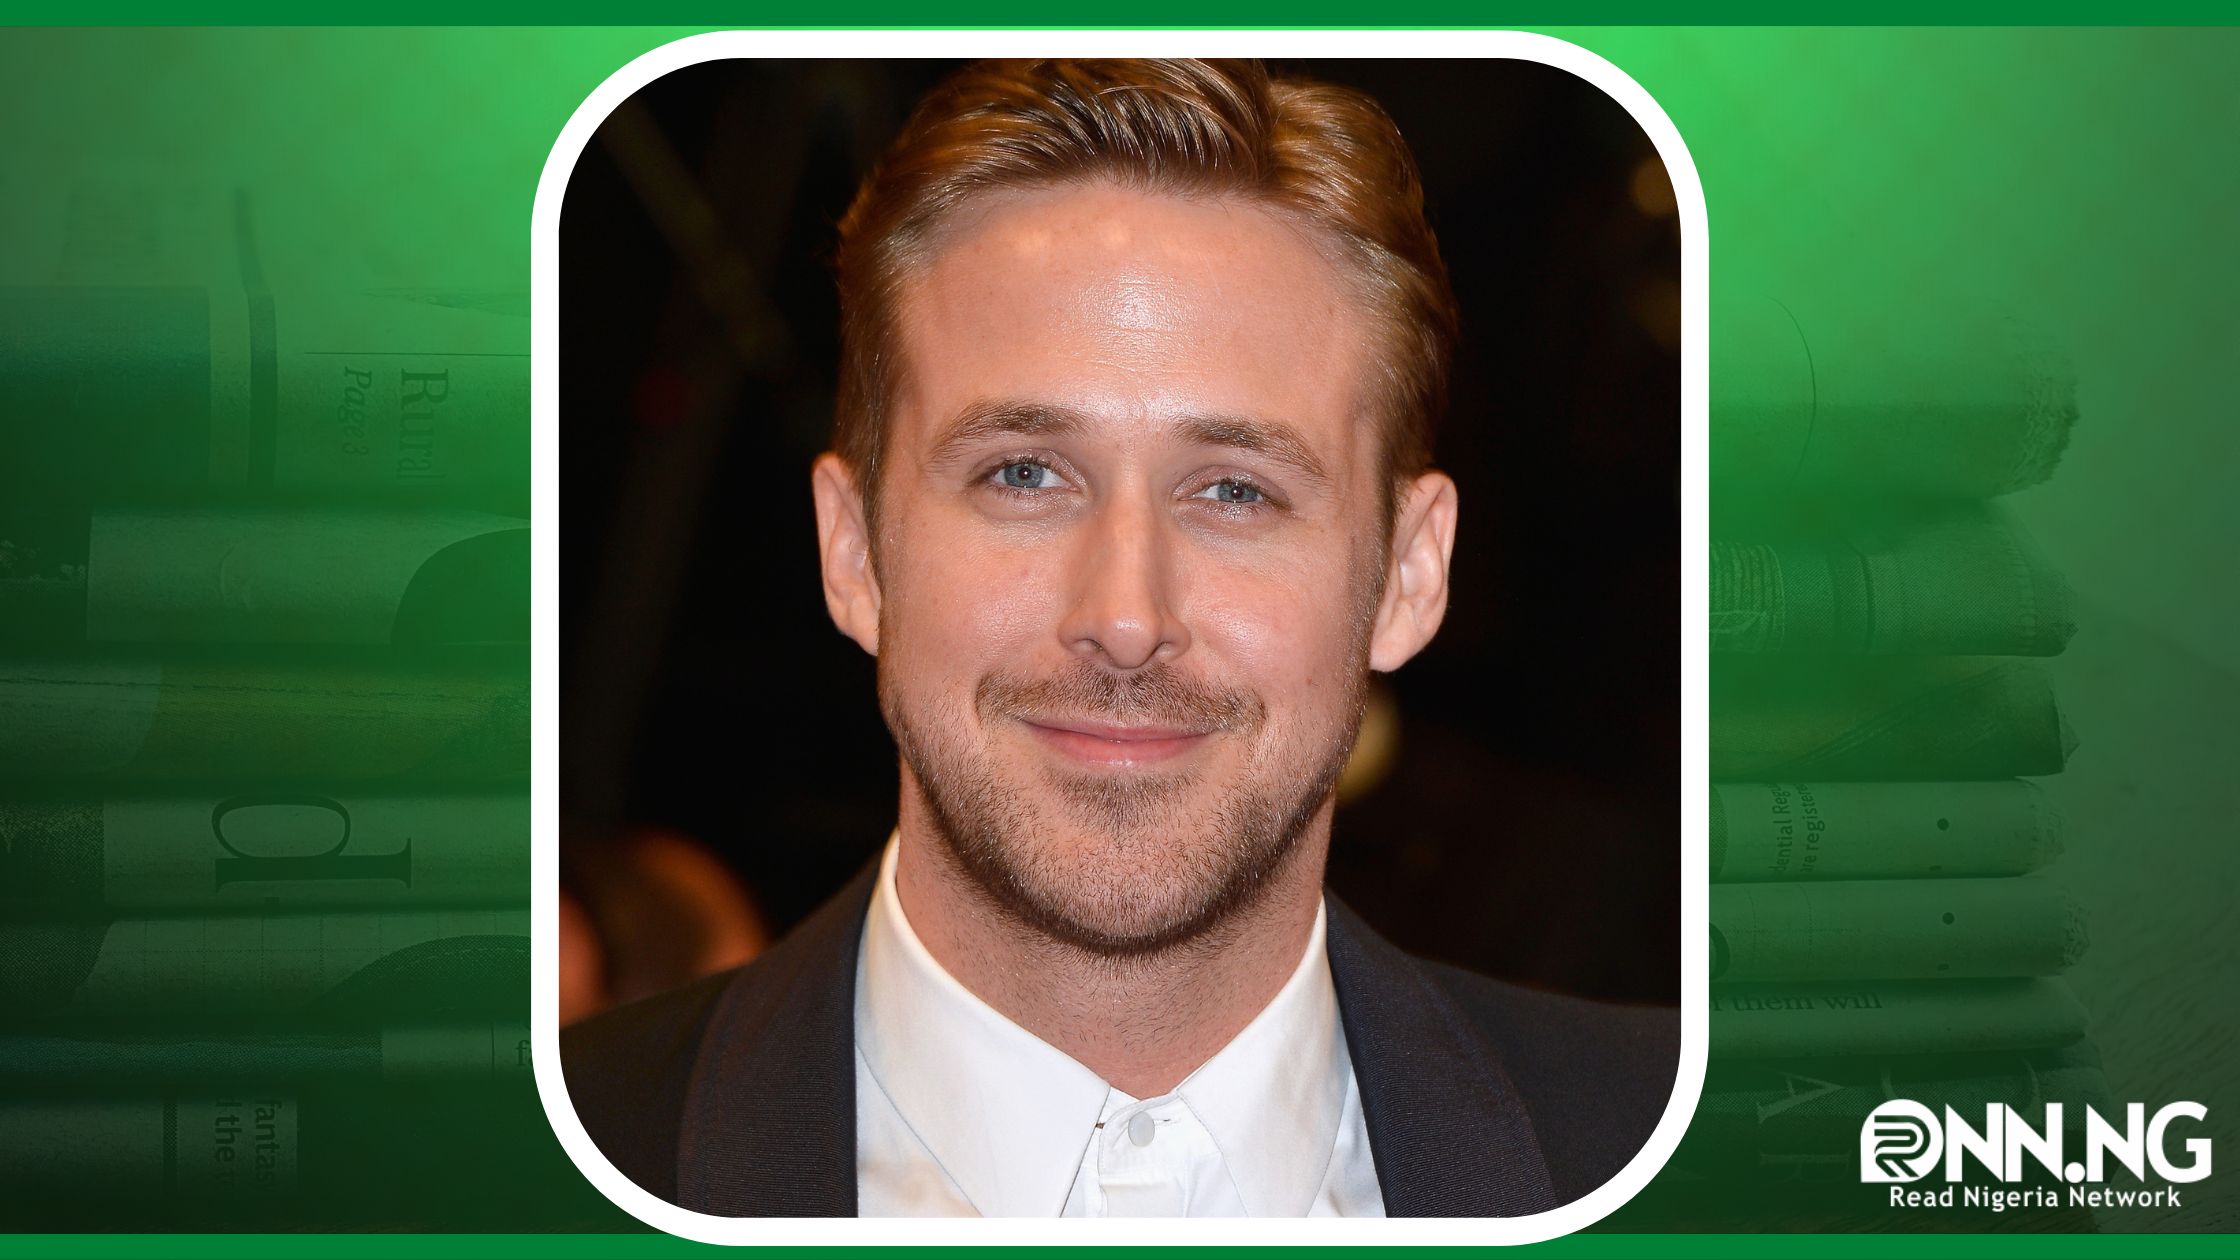 Ryan Gosling Biography And Net Worth